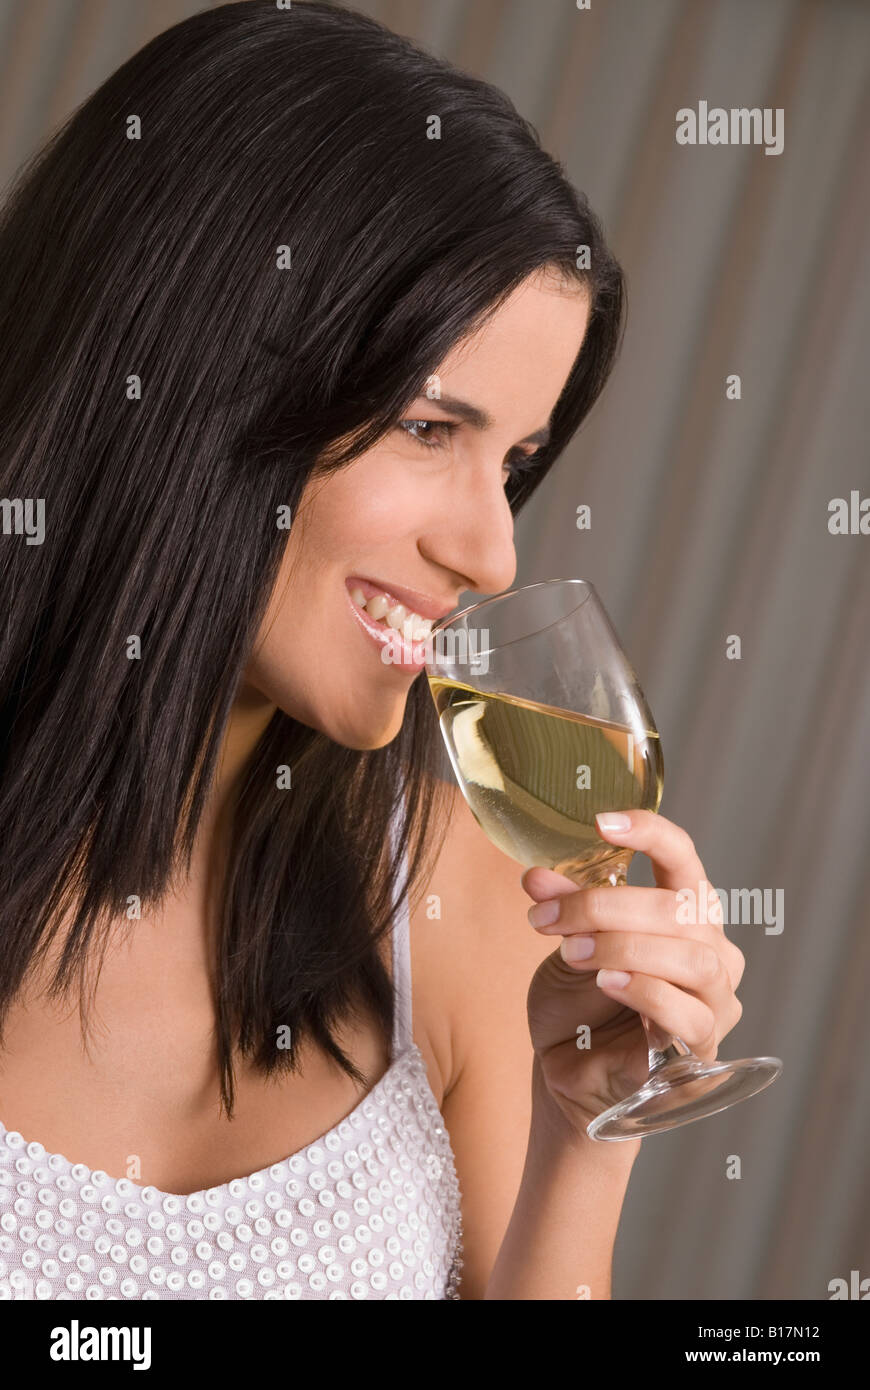 Hispanic woman drinking wine Stock Photo